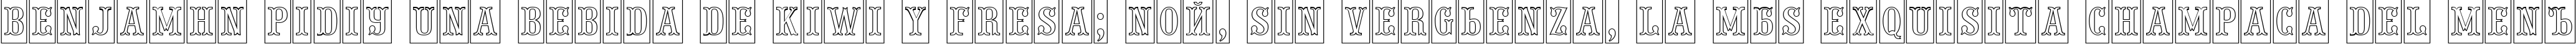 Пример написания шрифтом a_PresentumNrCmOtl текста на испанском